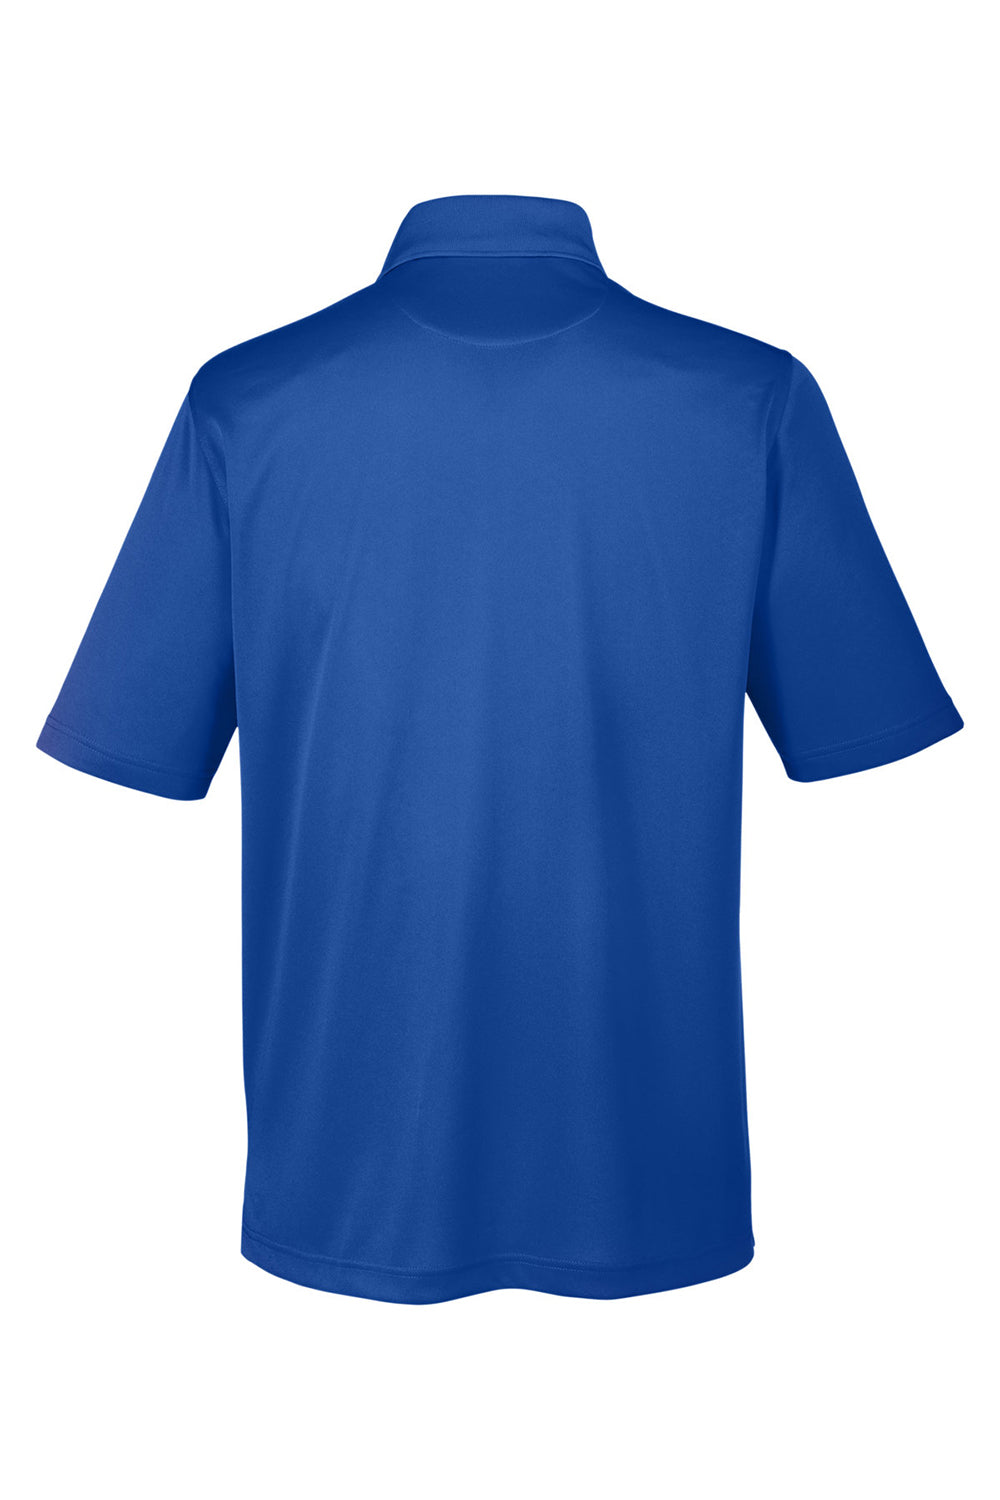 Harriton M348P Mens Advantage Performance Moisture Wicking Short Sleeve Polo Shirt w/ Pocket True Royal Blue Flat Back